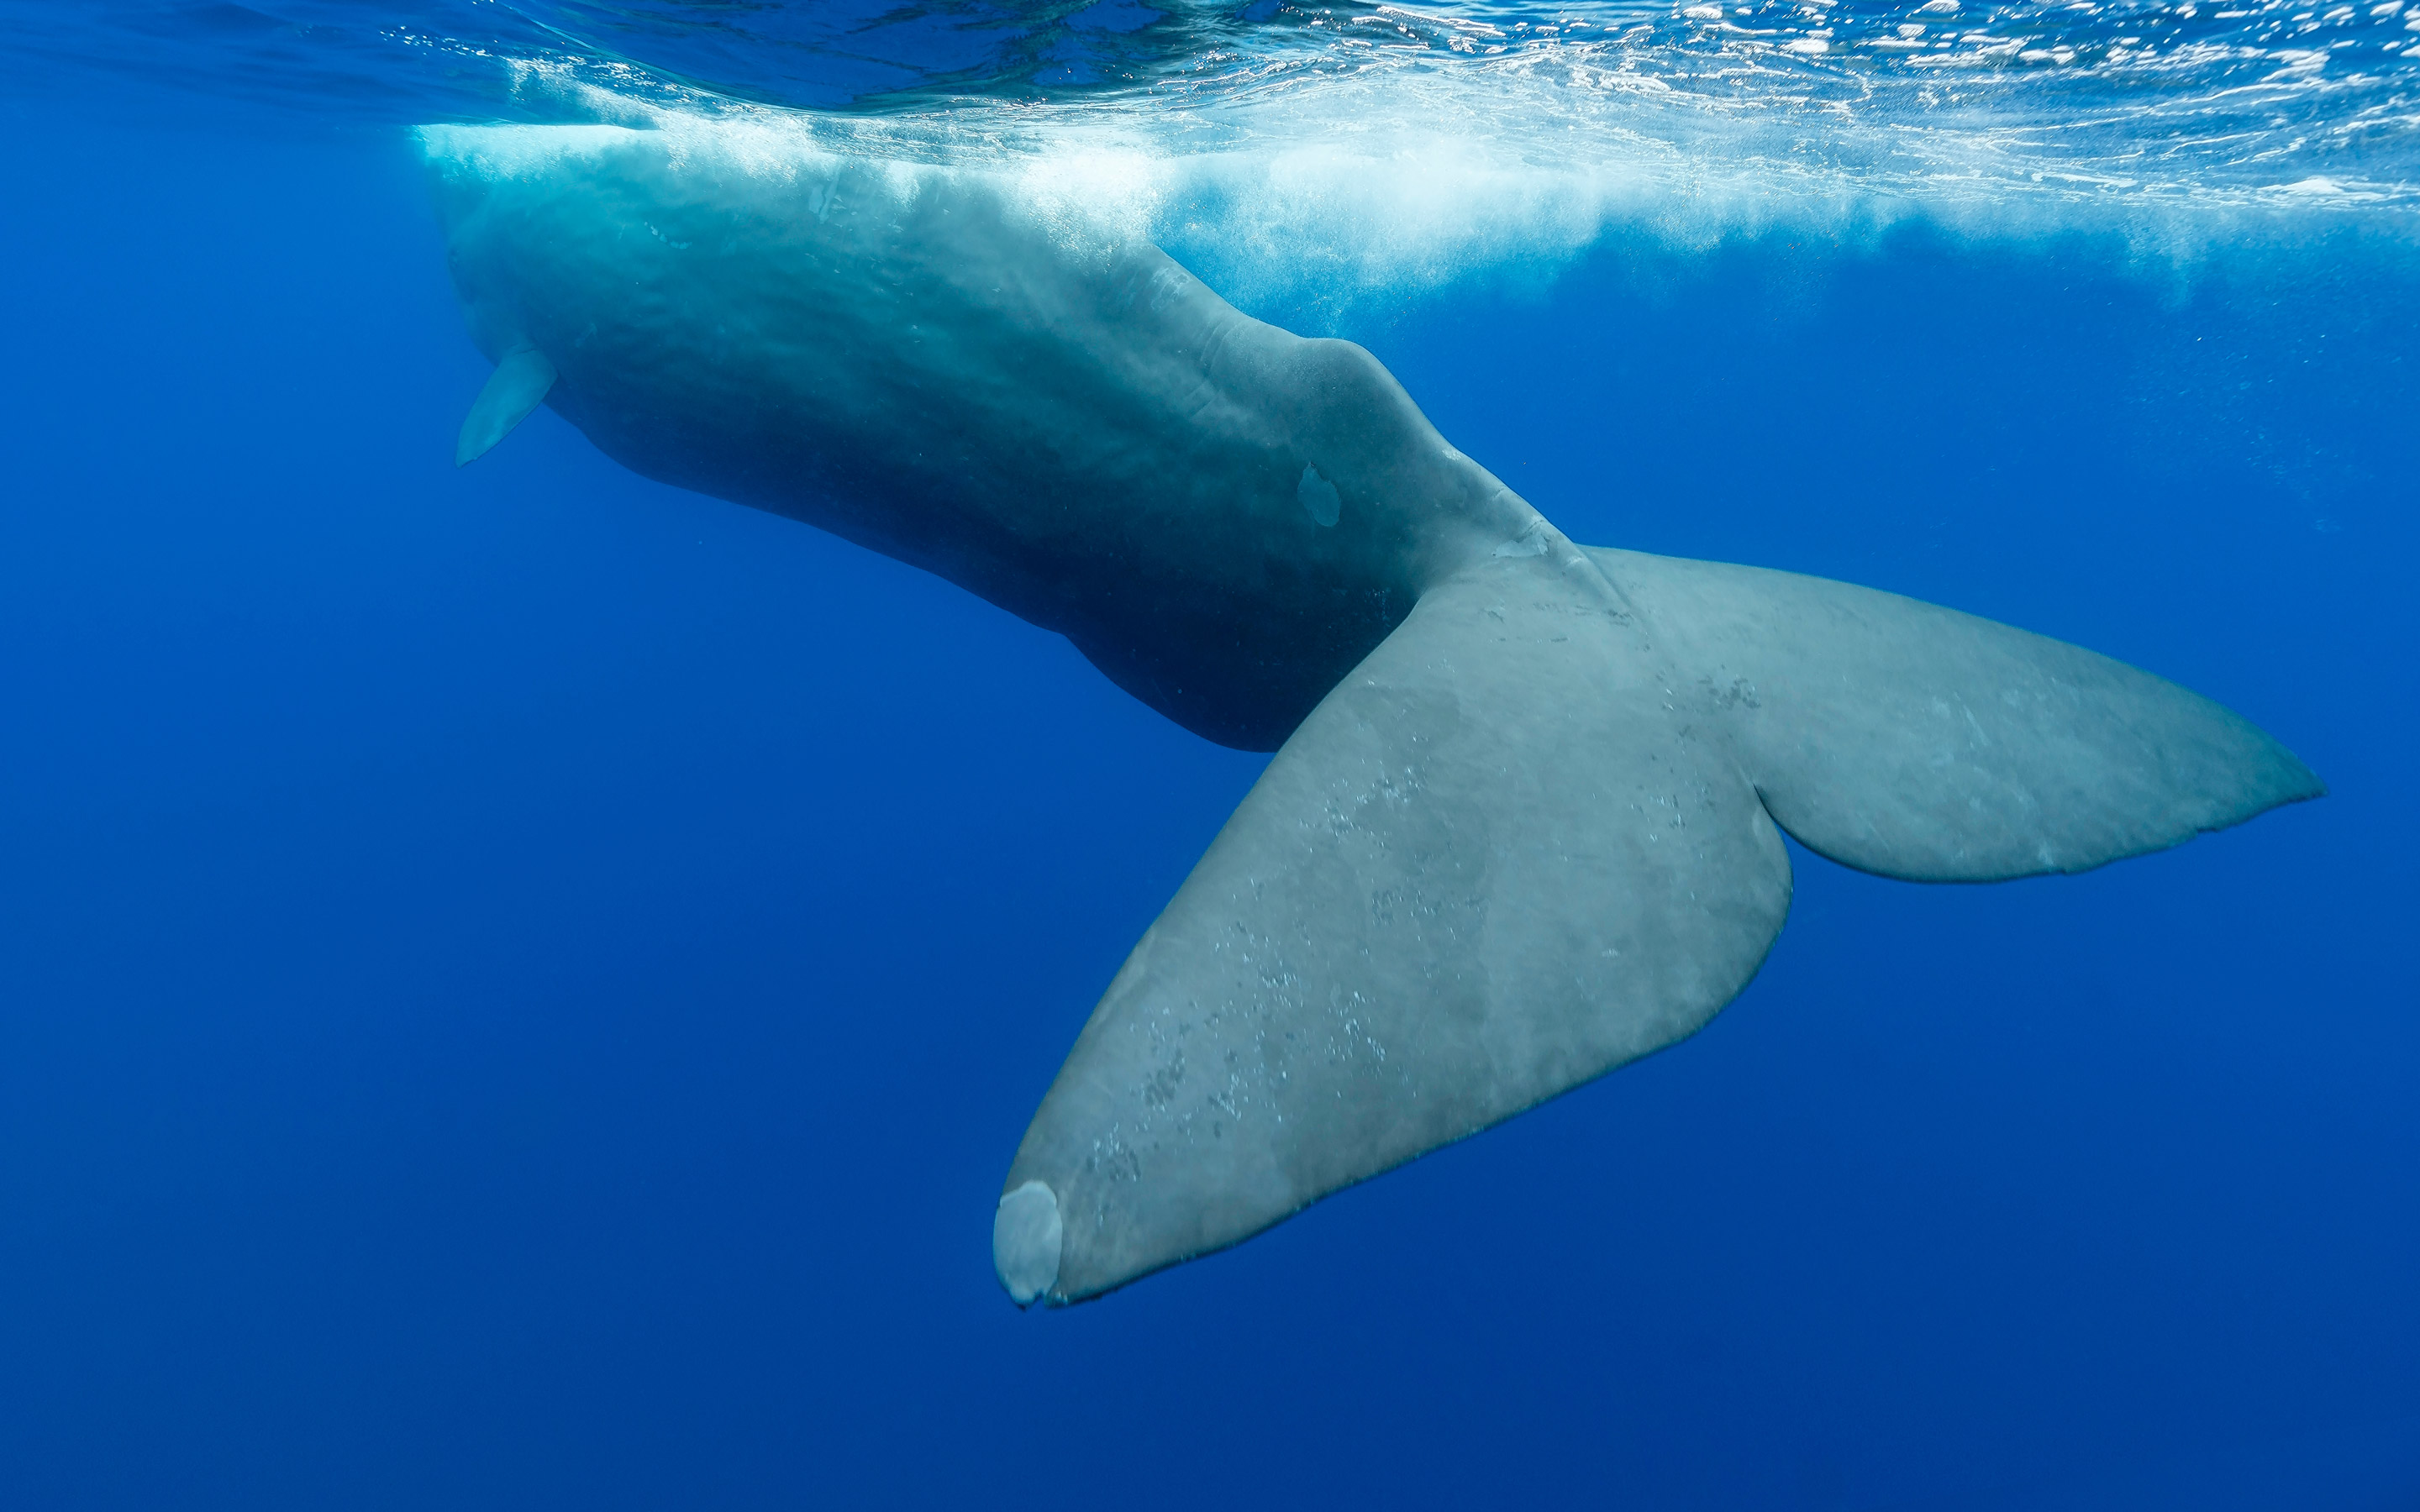 christie decker add whale tails in public photo